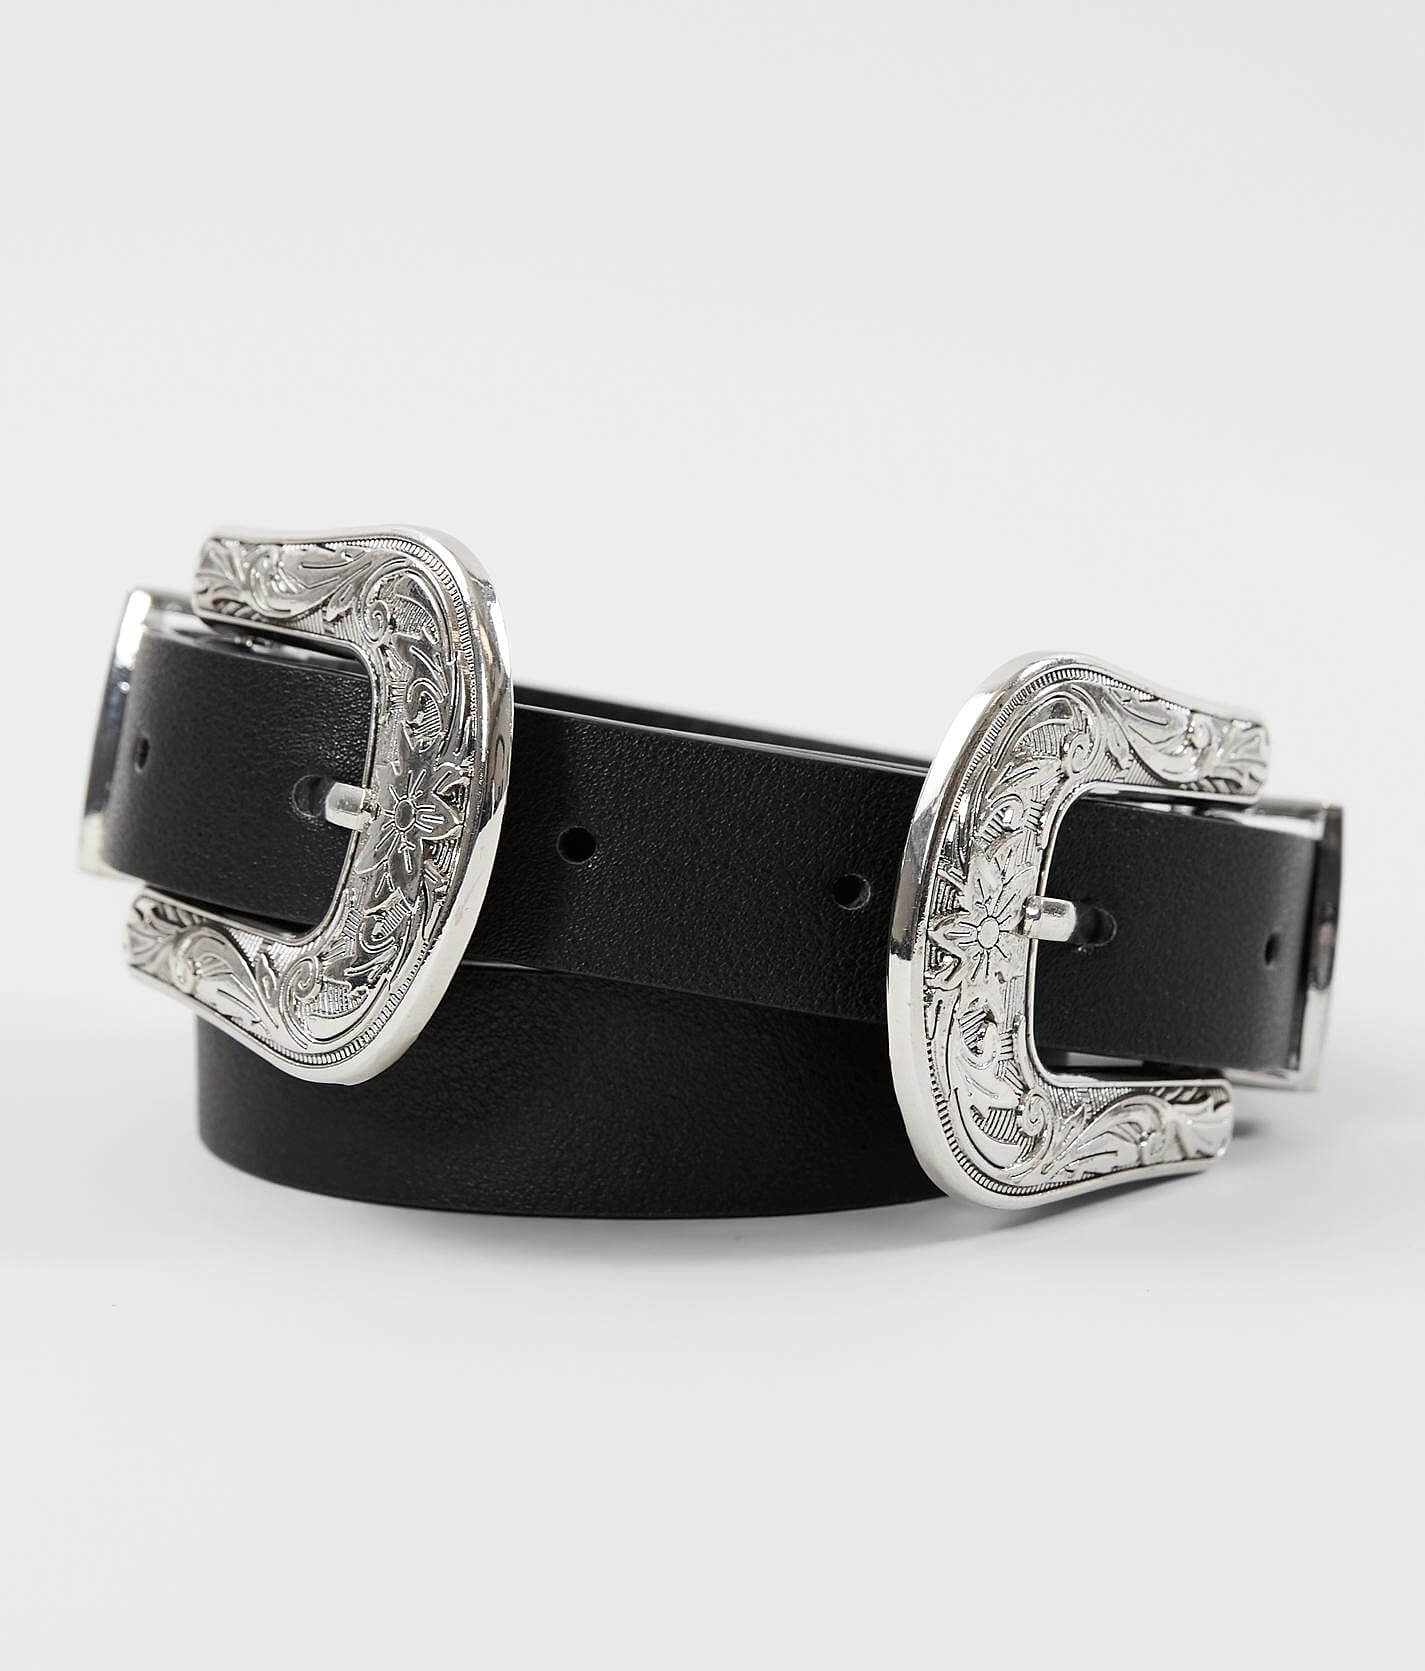 belt buckle belt